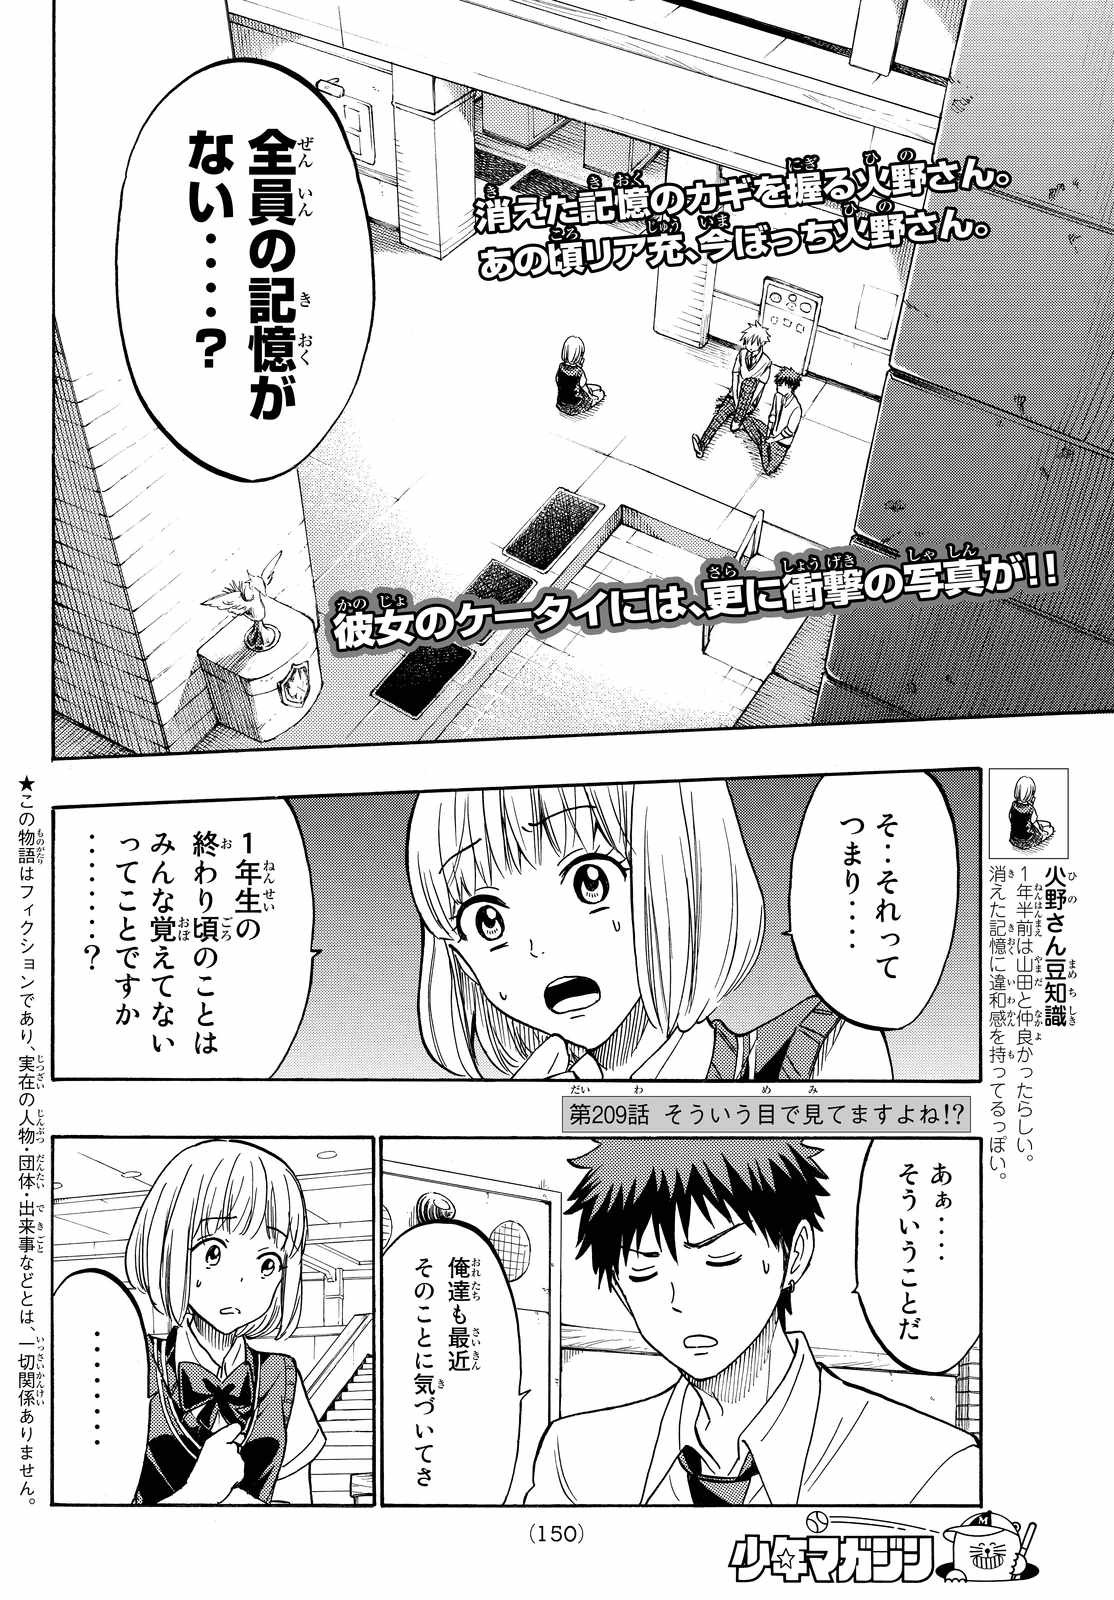 Yamada-kun to 7-nin no Majo - Chapter 209 - Page 2